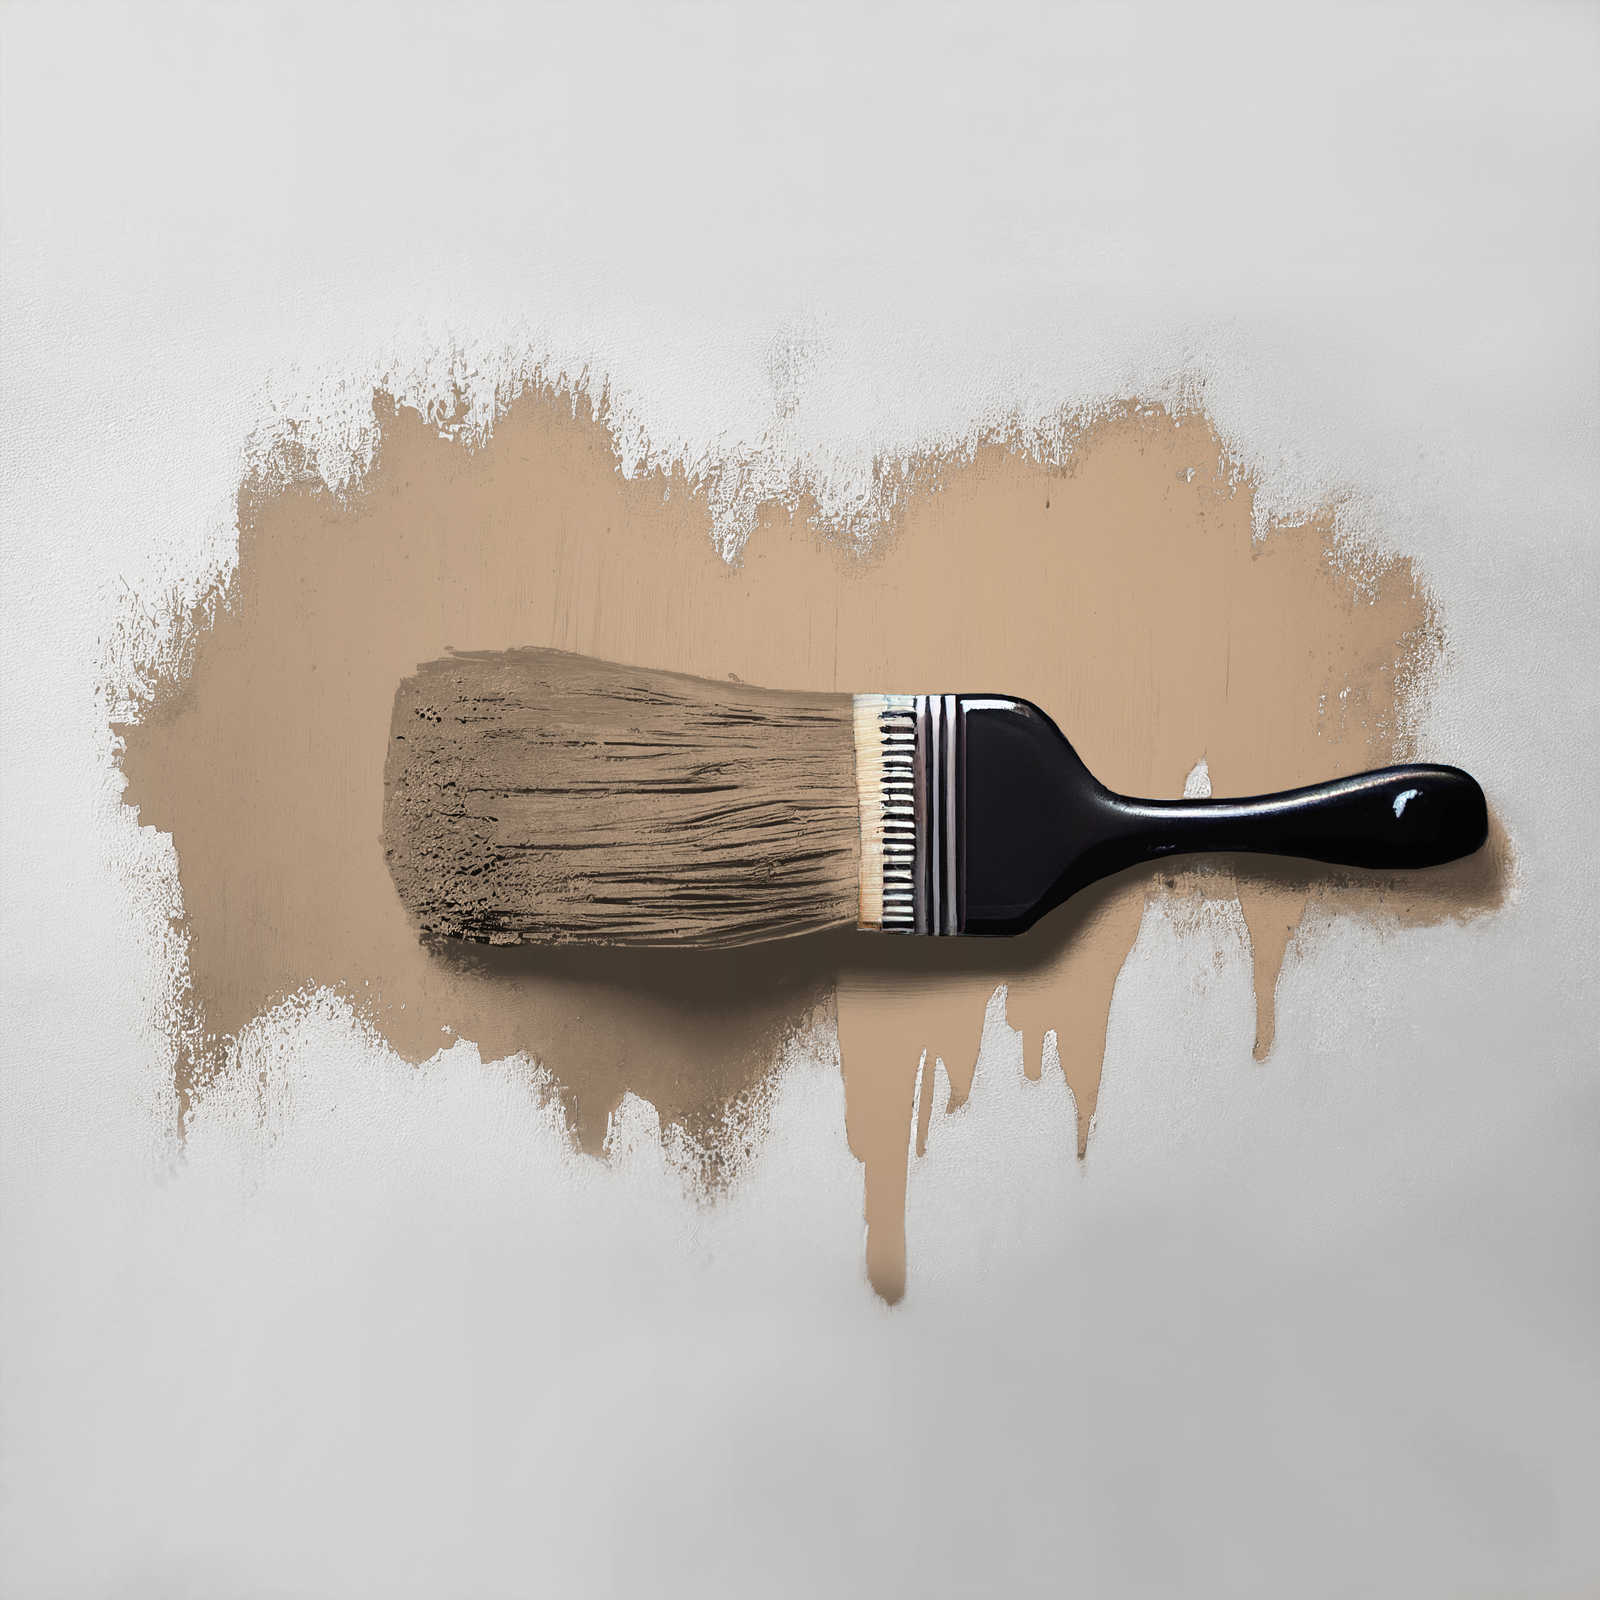             Peinture murale TCK6011 »Whispy Walnut« en beige intense – 2,5 litres
        